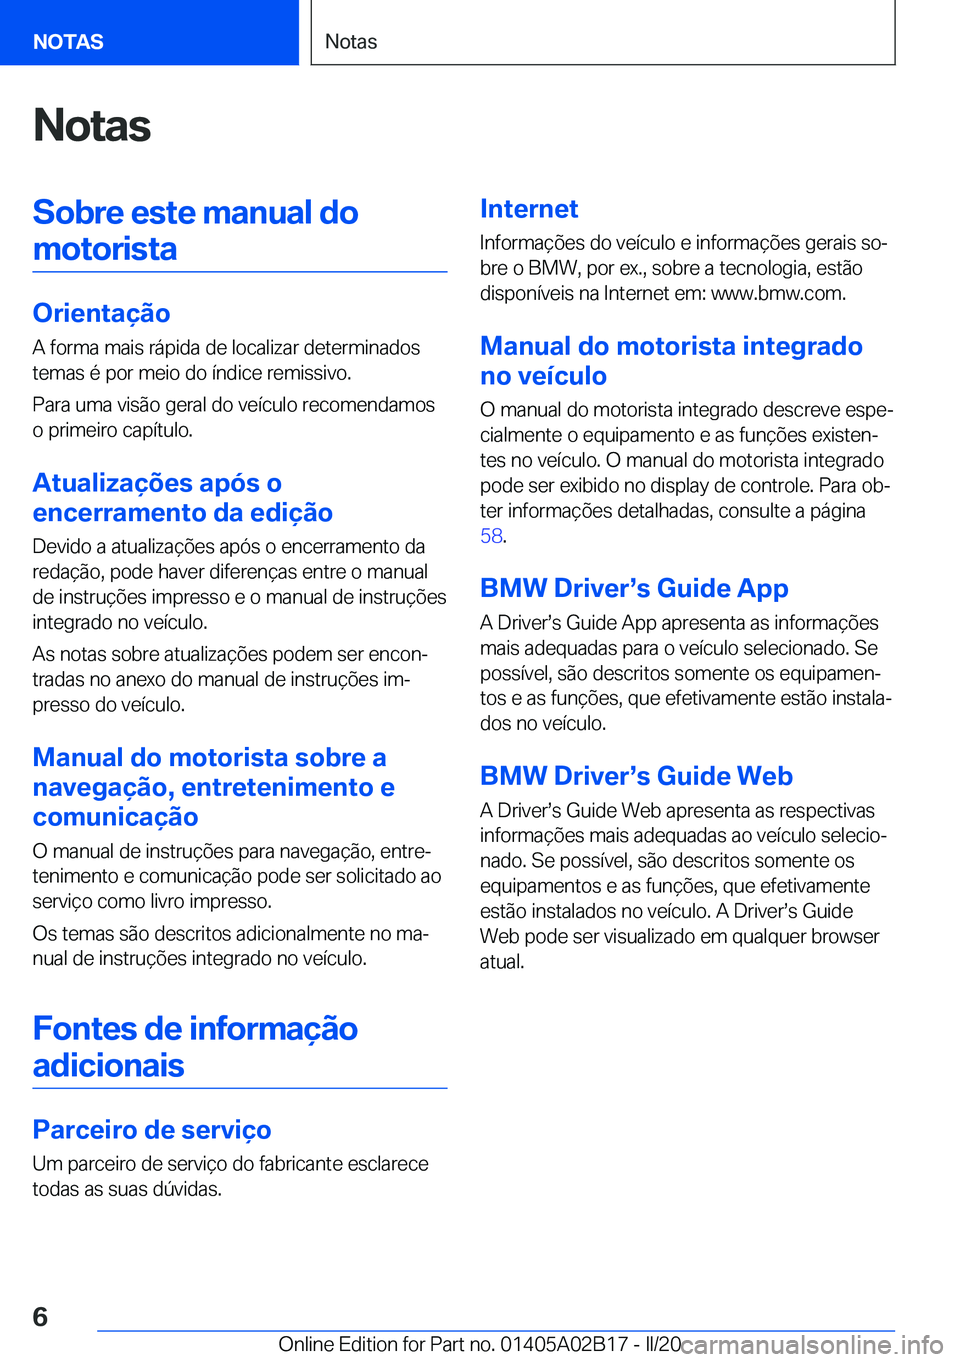 BMW X1 2020  Manual do condutor (in Portuguese) �N�o�t�a�s�S�o�b�r�e��e�s�t�e��m�a�n�u�a�l��d�o�m�o�t�o�r�i�s�t�a
�O�r�i�e�n�t�a�